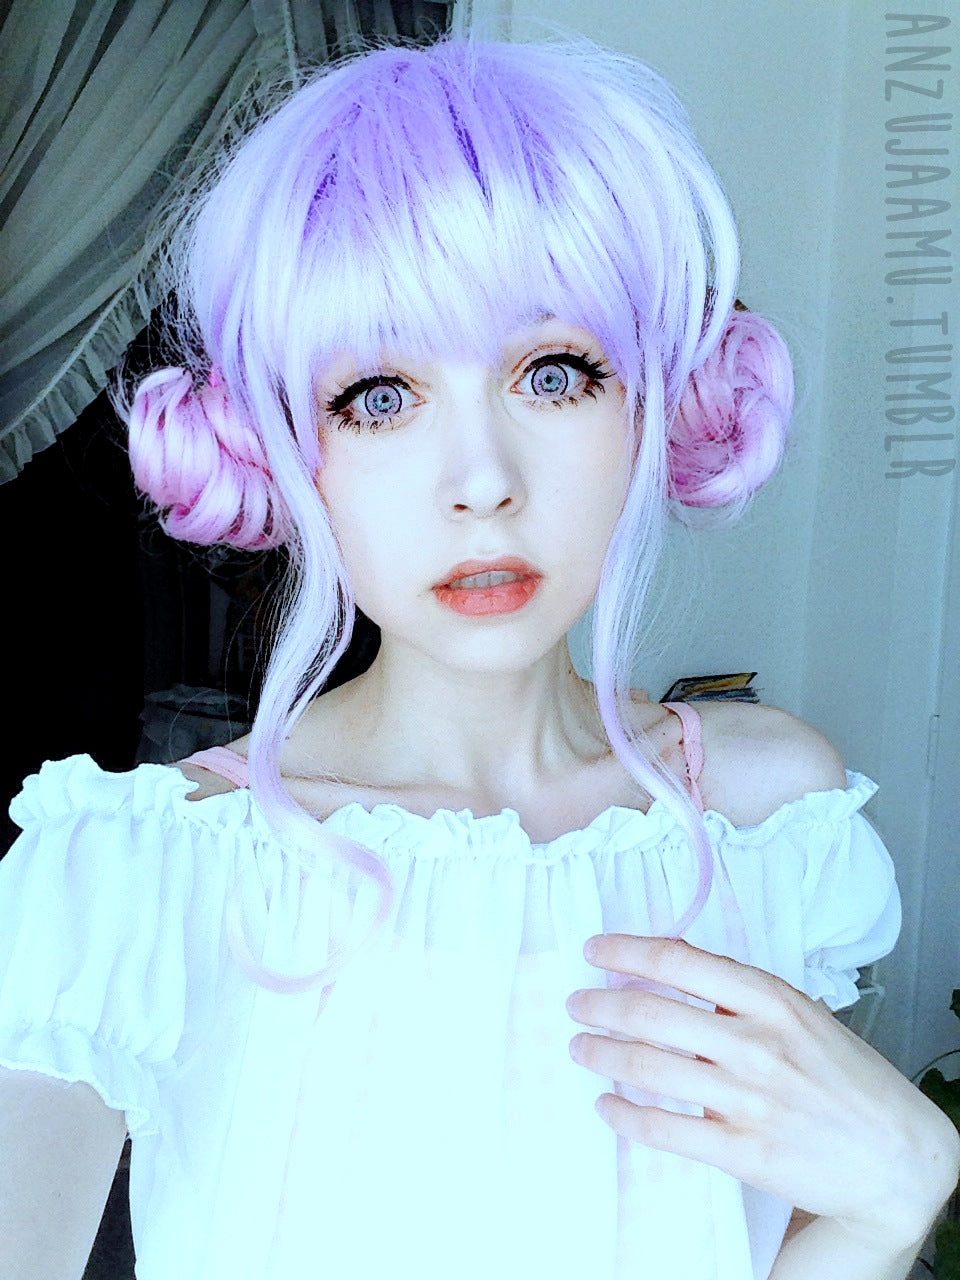 Kawaii Cute Soft Pink Pastel Harajuku Curly Sugar Wavy Ombre Lavender Wig - peachiieshop